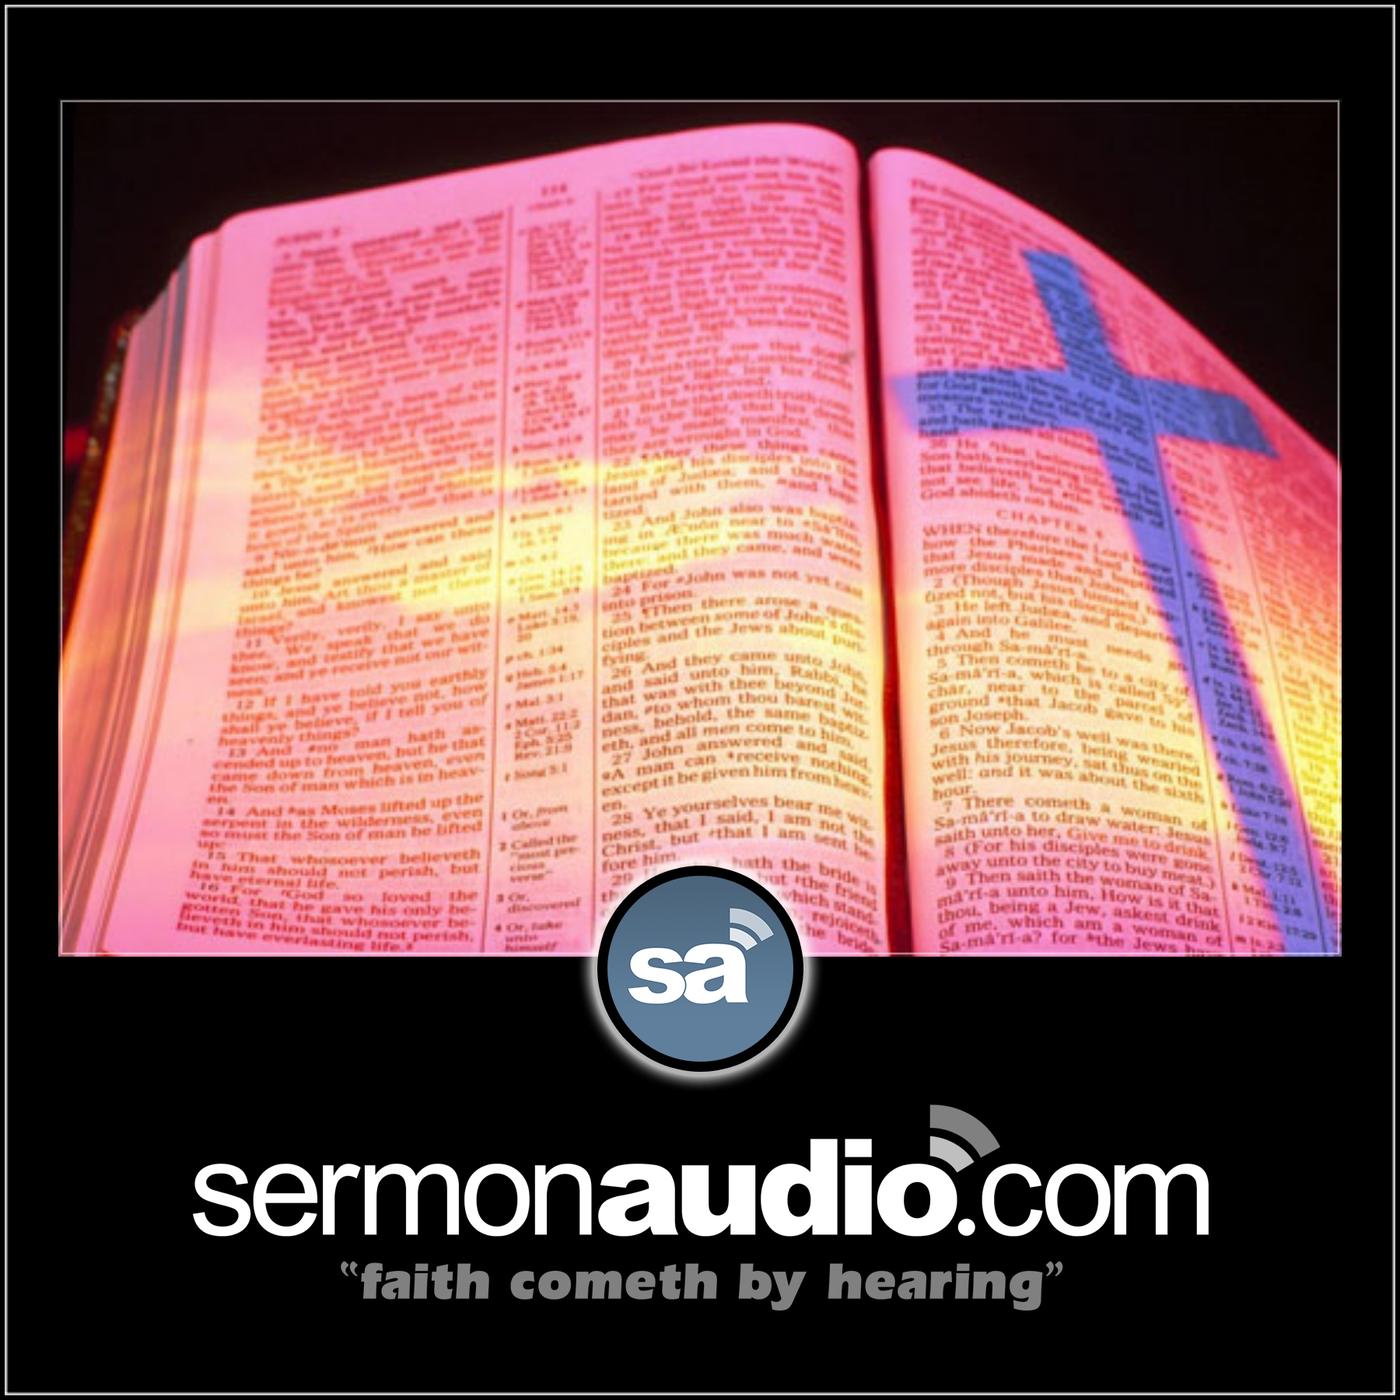 North Korea audio weblog on SermonAudio